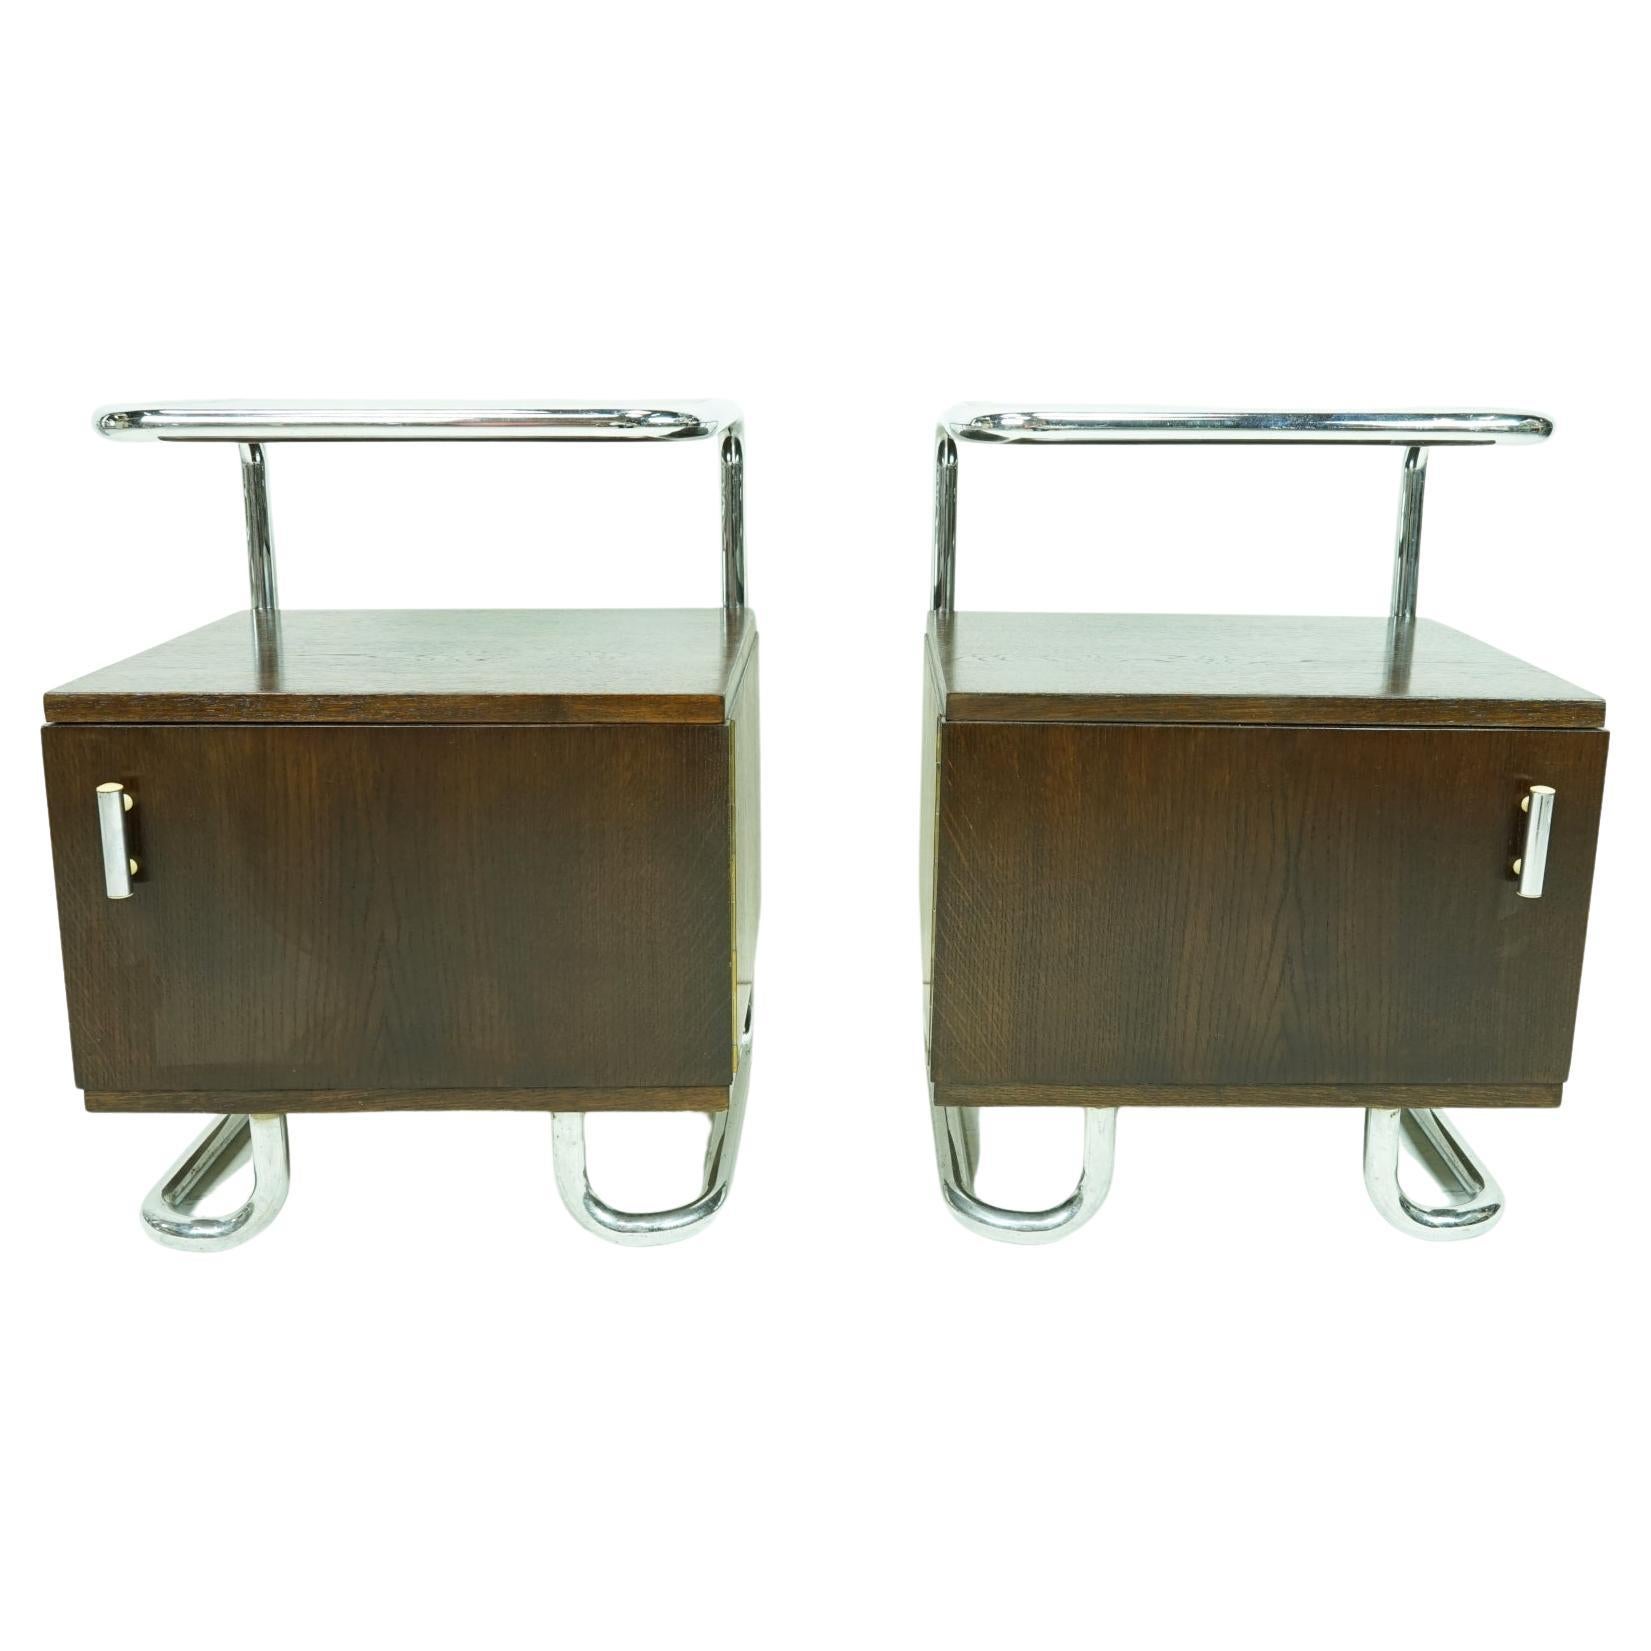 Original Restored Bauhaus Nightstands 'Set of 2' by Gottwald Bedside Tables